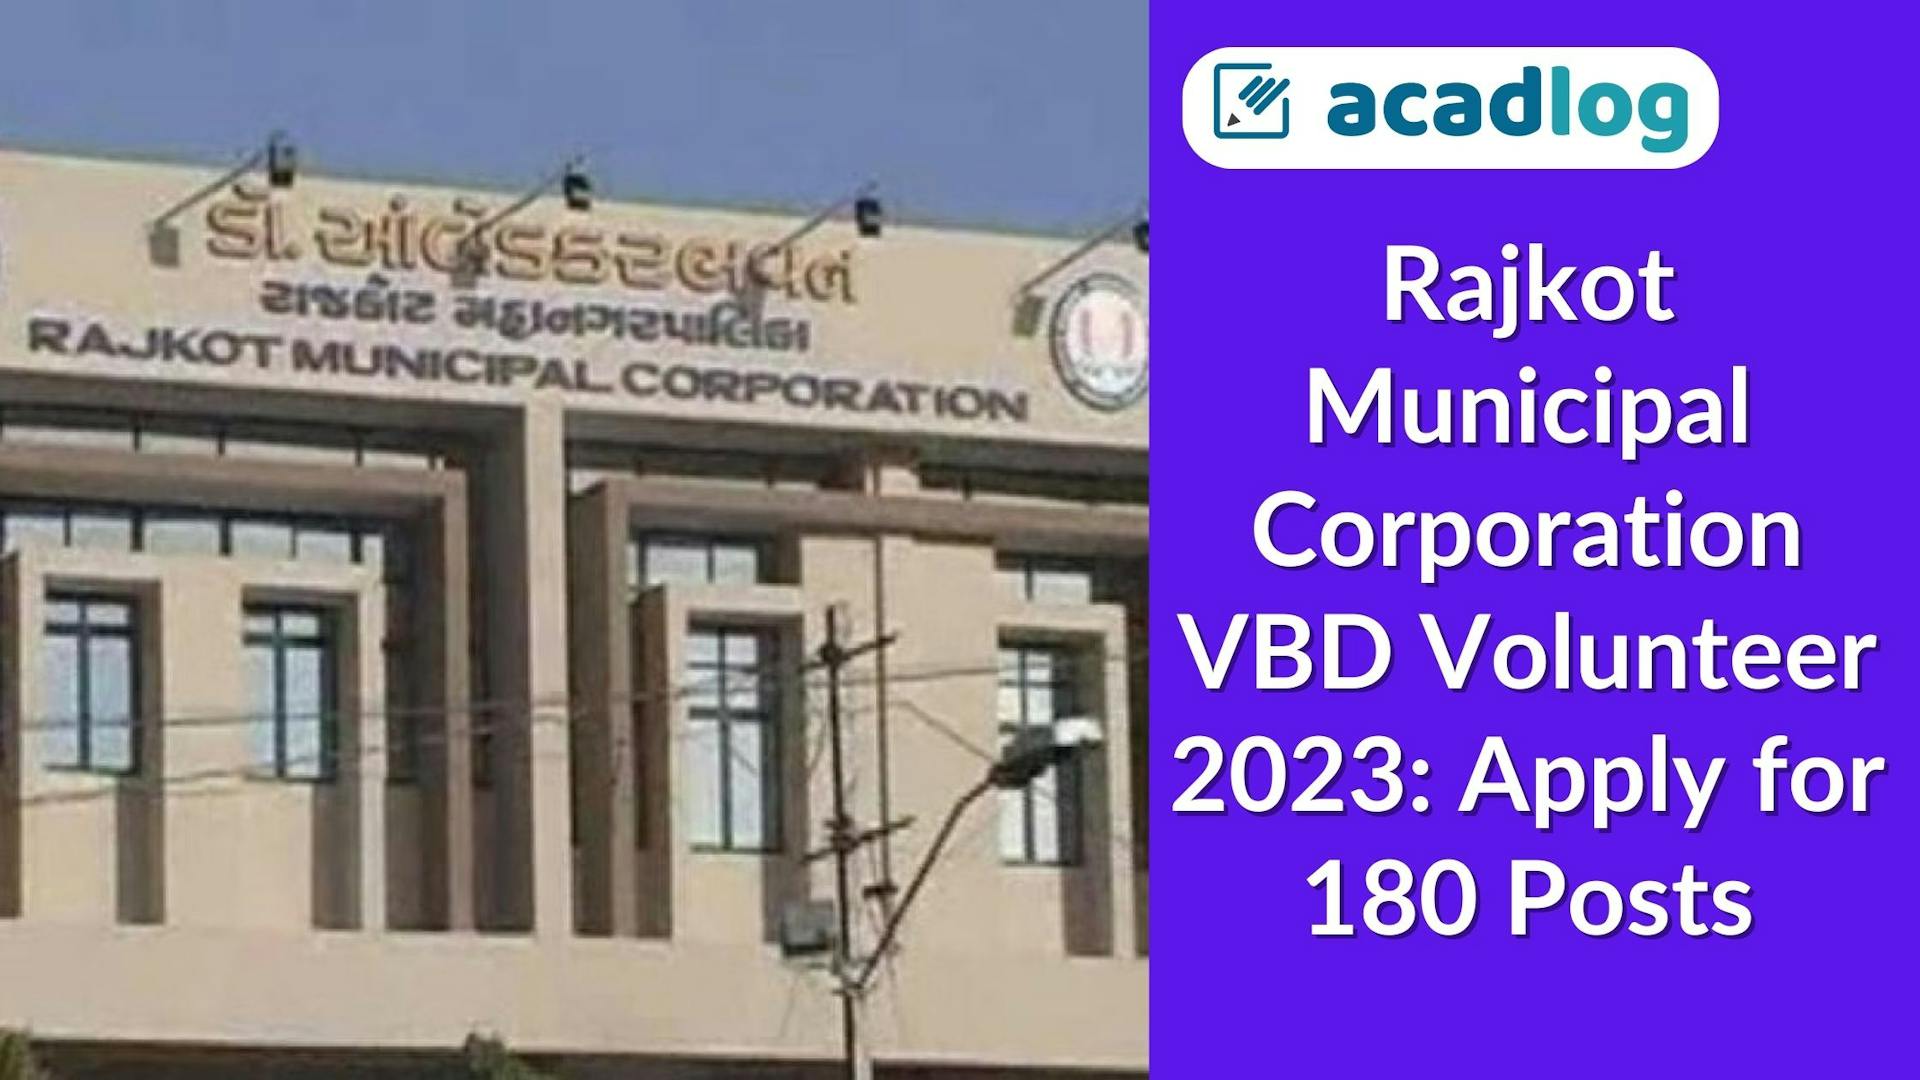 Rajkot Municipal Corporation VBD Volunteer 2023: Apply for 180 Posts